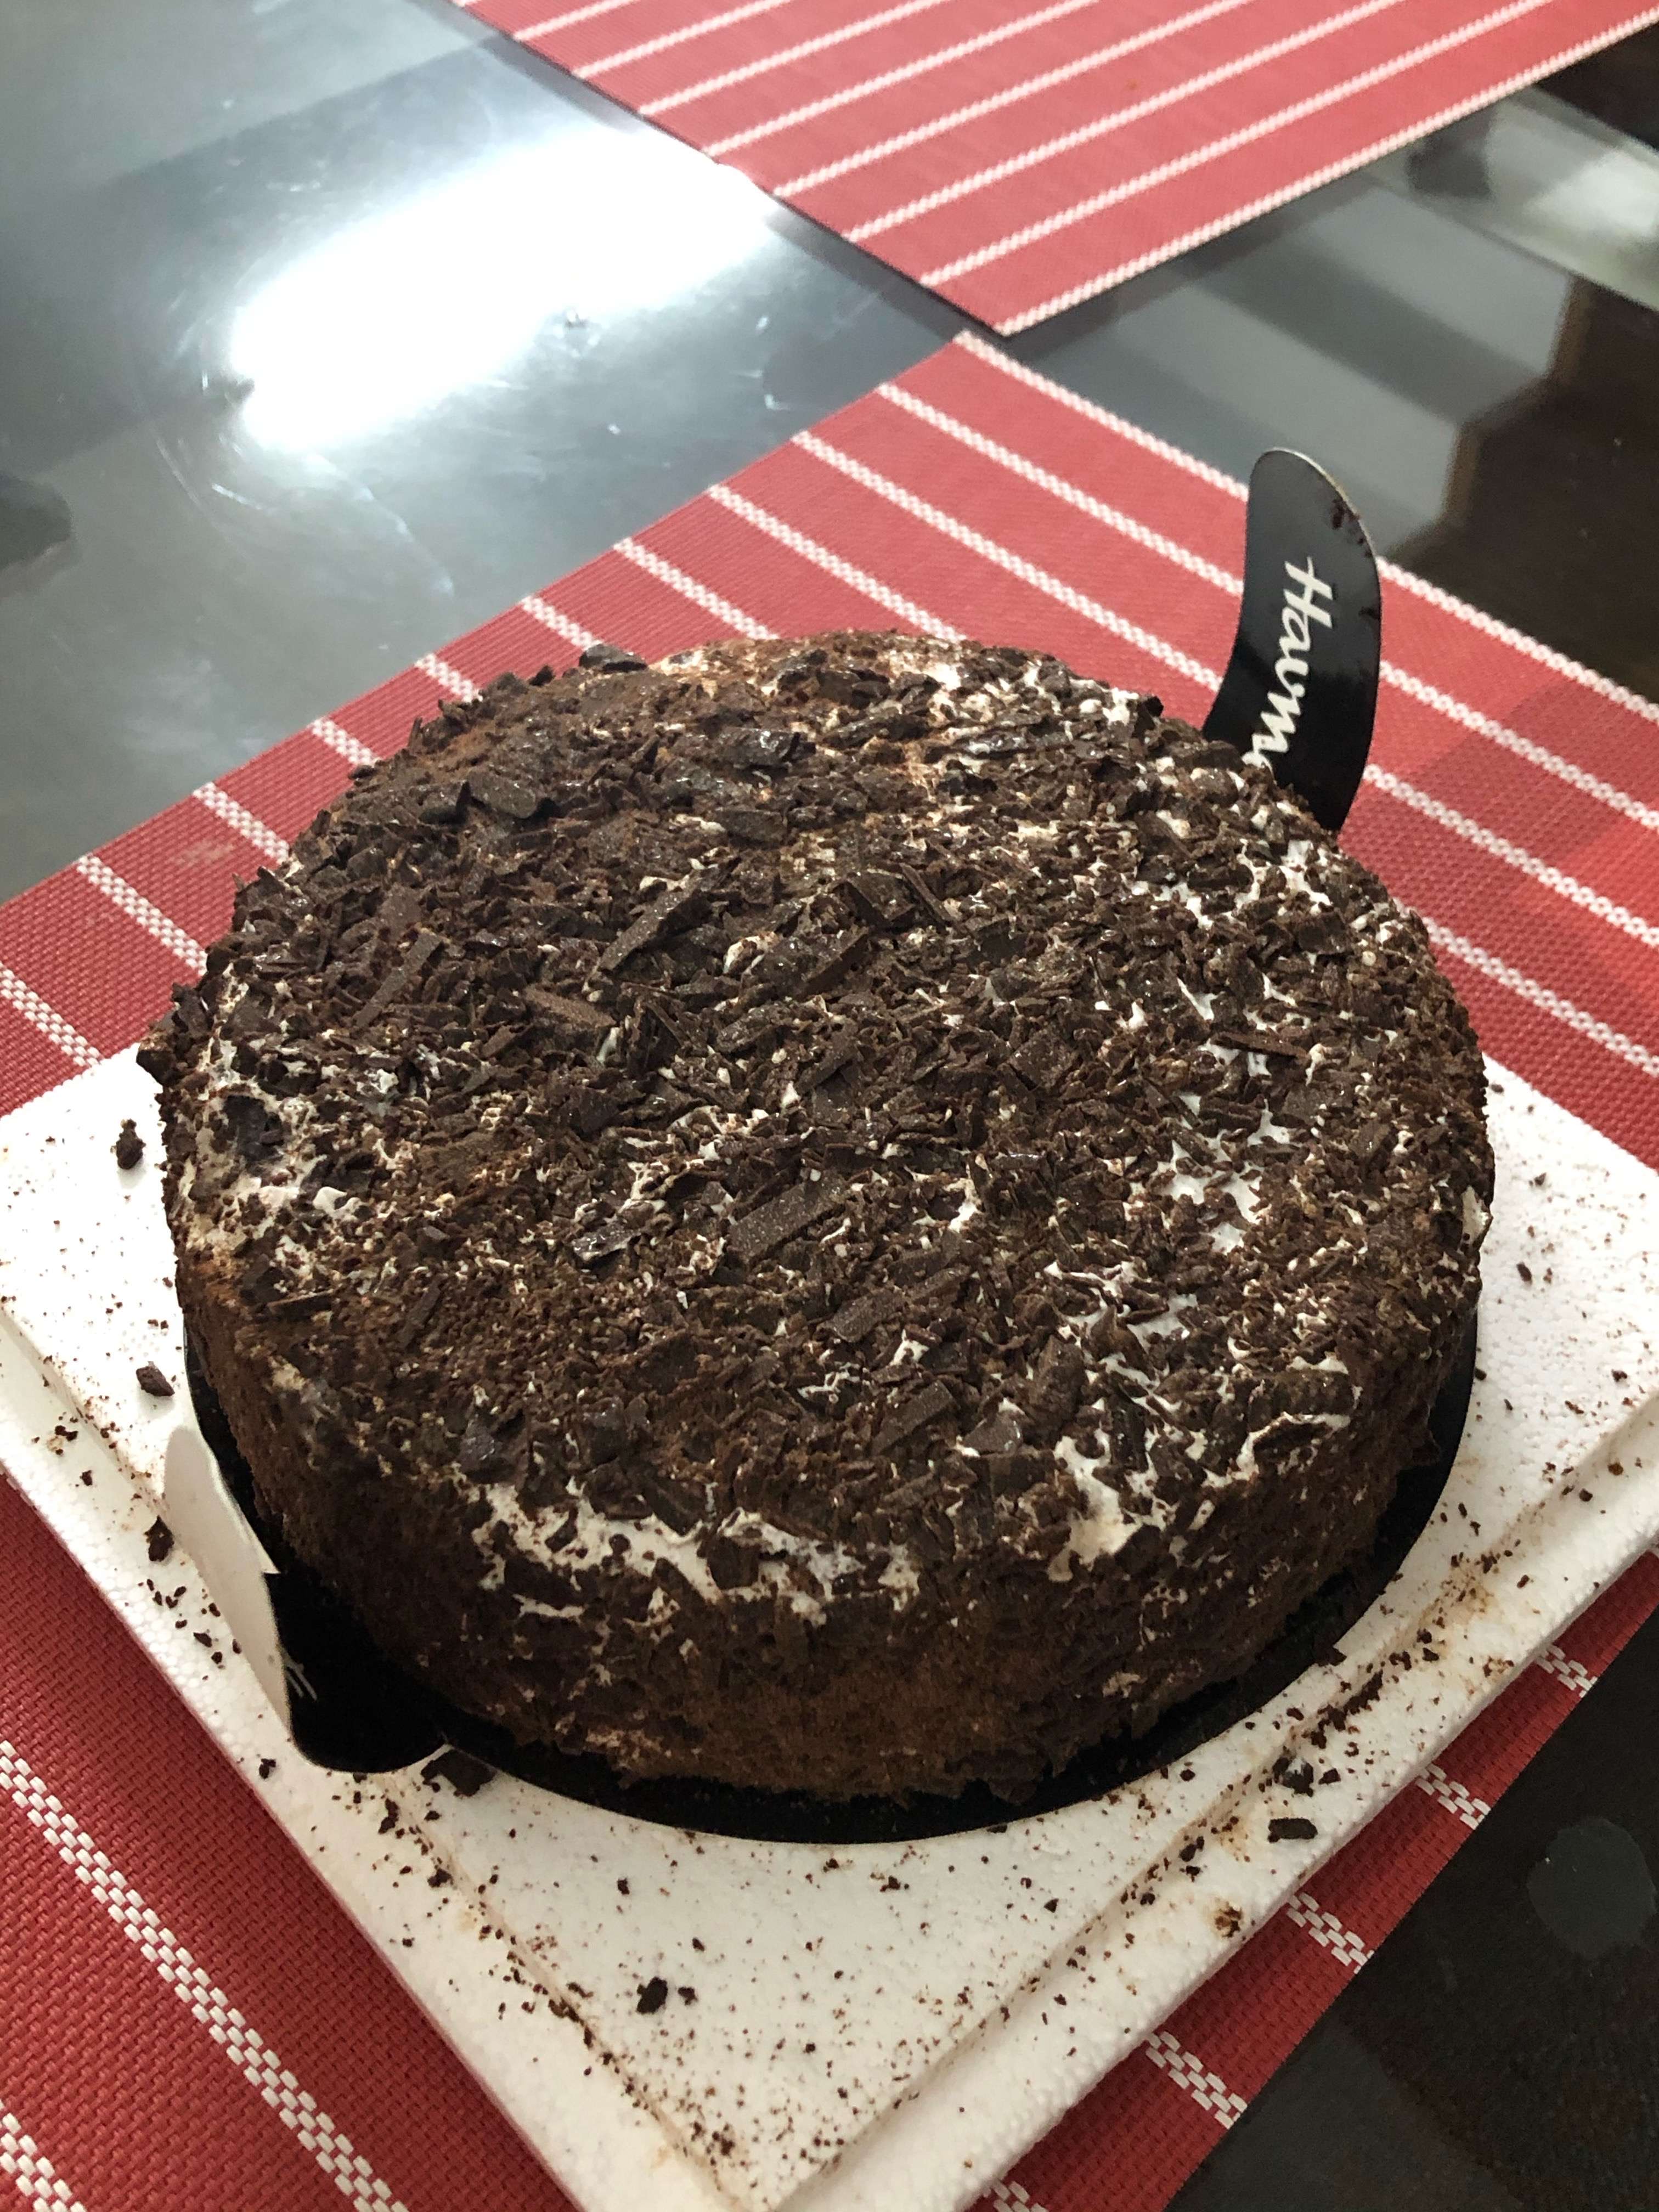 Chocolate ice-cream cake - Picture of Havmor Hav Funn, Mumbai - Tripadvisor